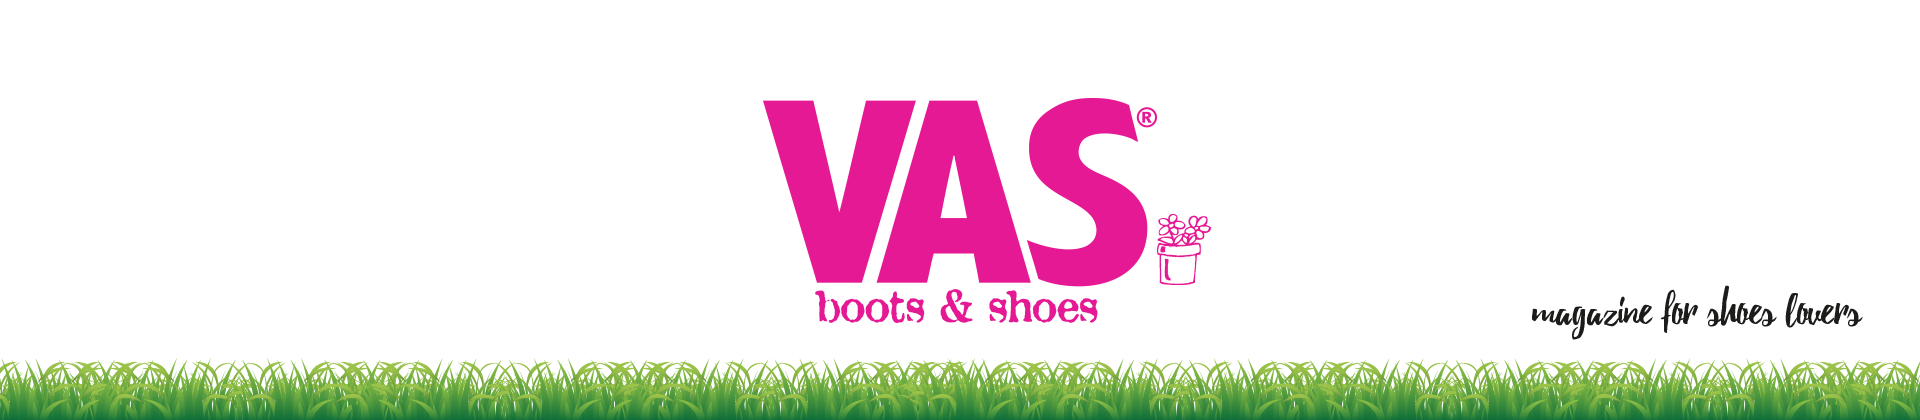 VAS – Magazine